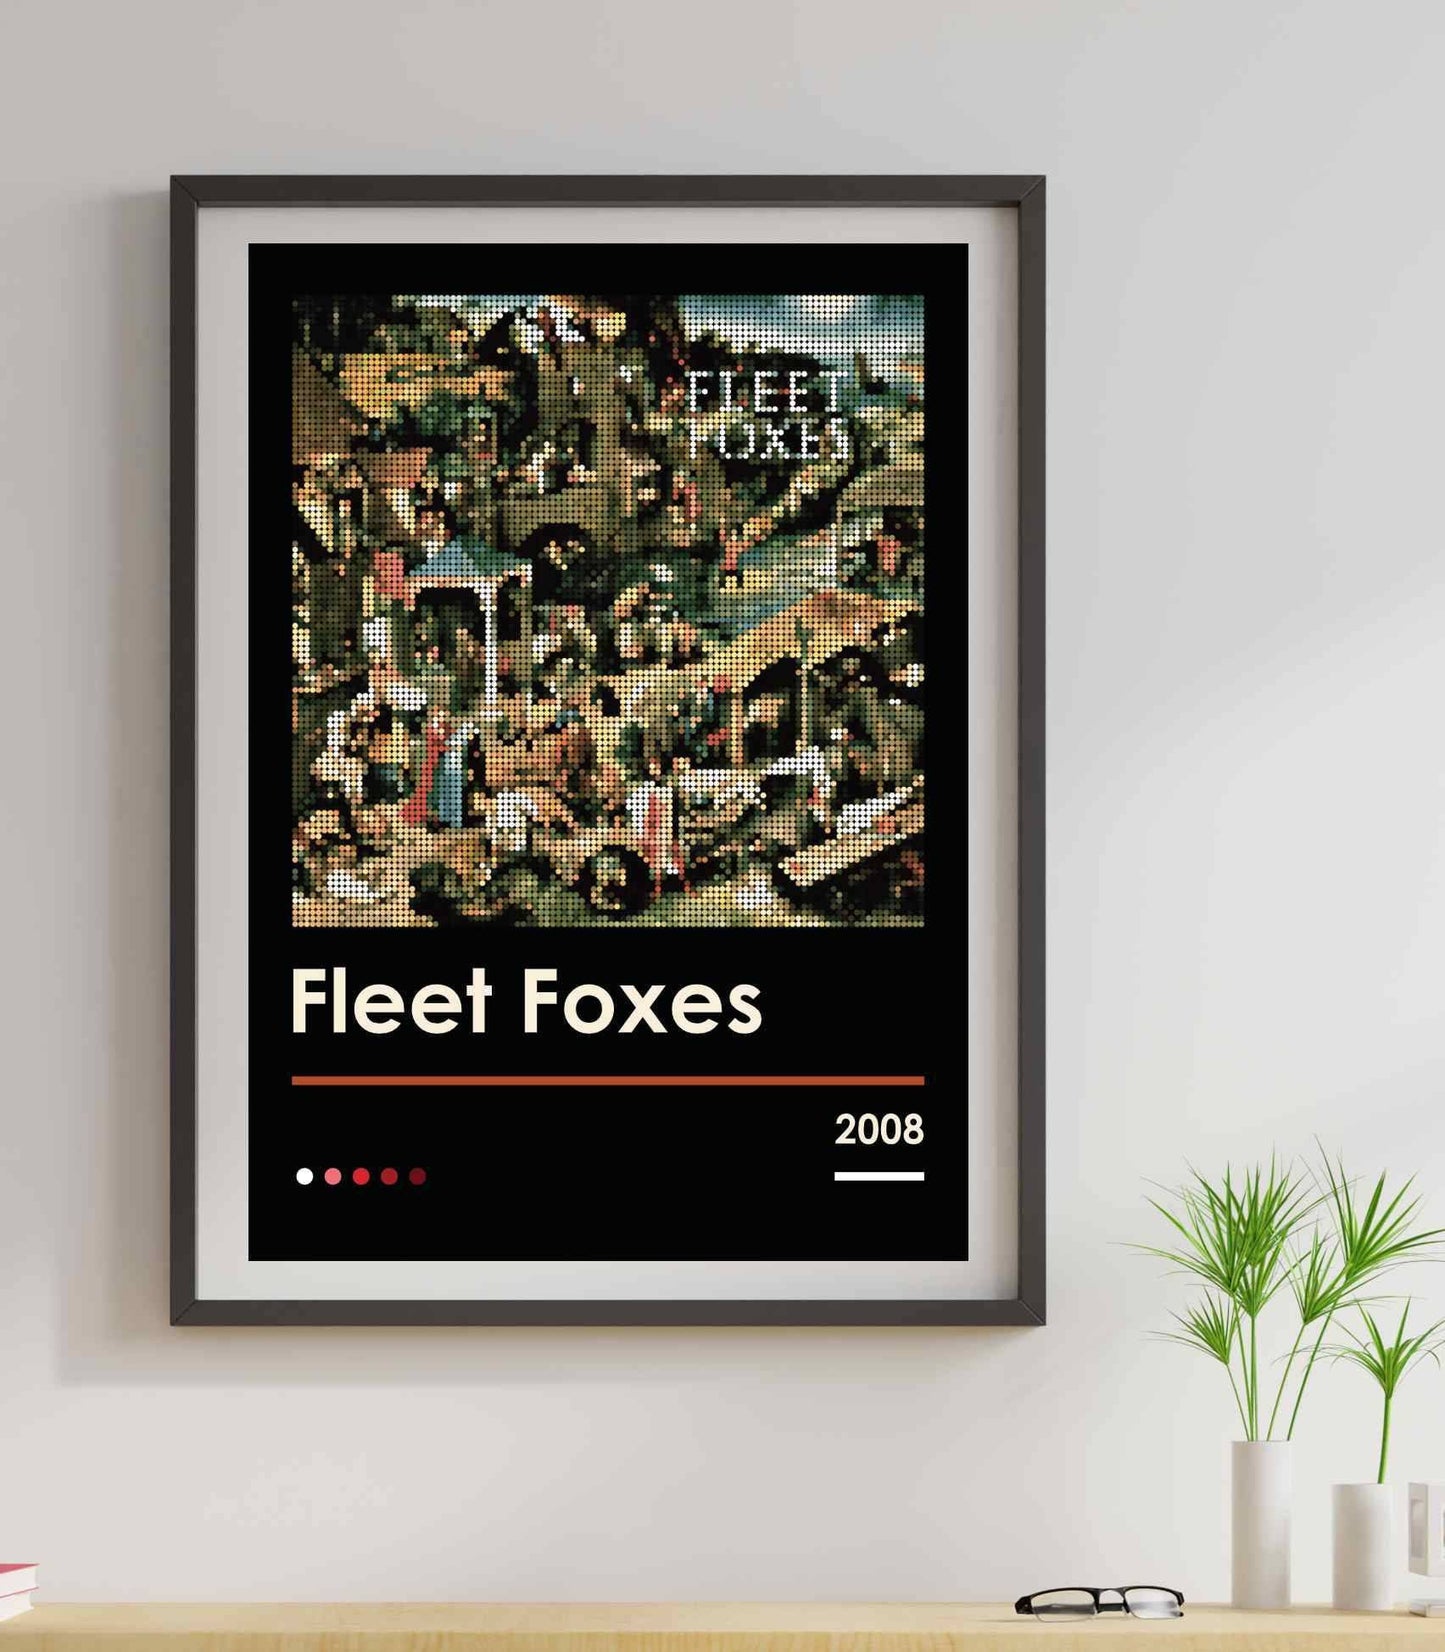 Vintage-Inspired Fleet Foxes Poster